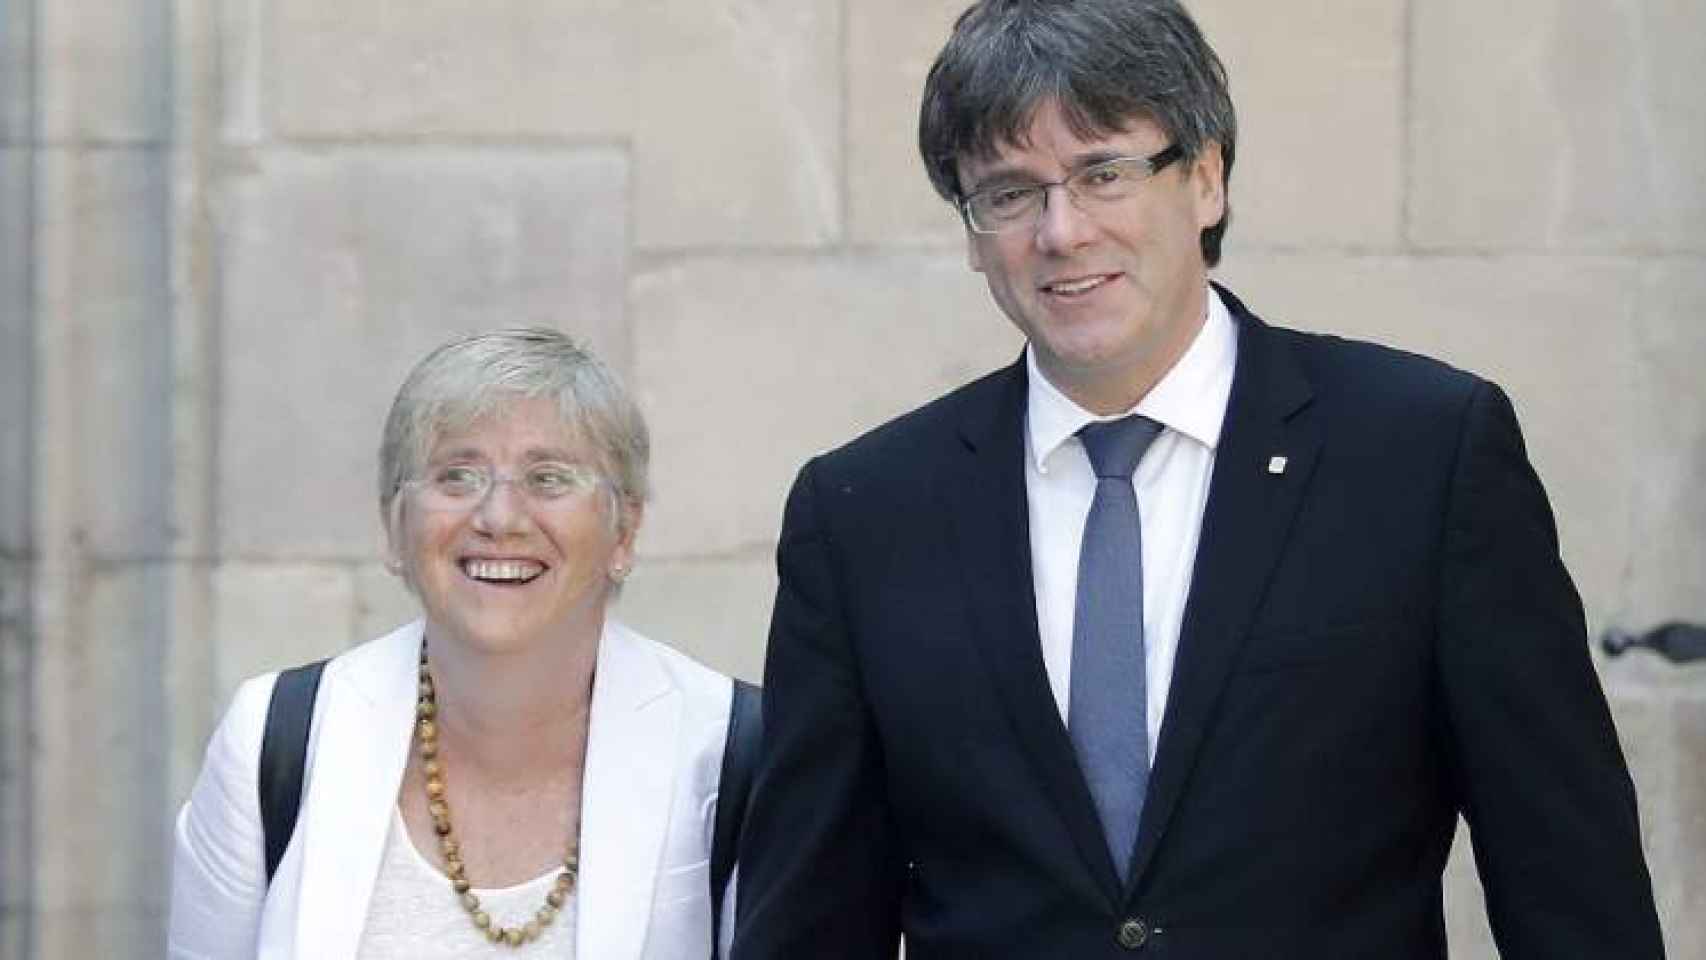 La consellera Clara Ponsati junto al expresidente Puigdemont.